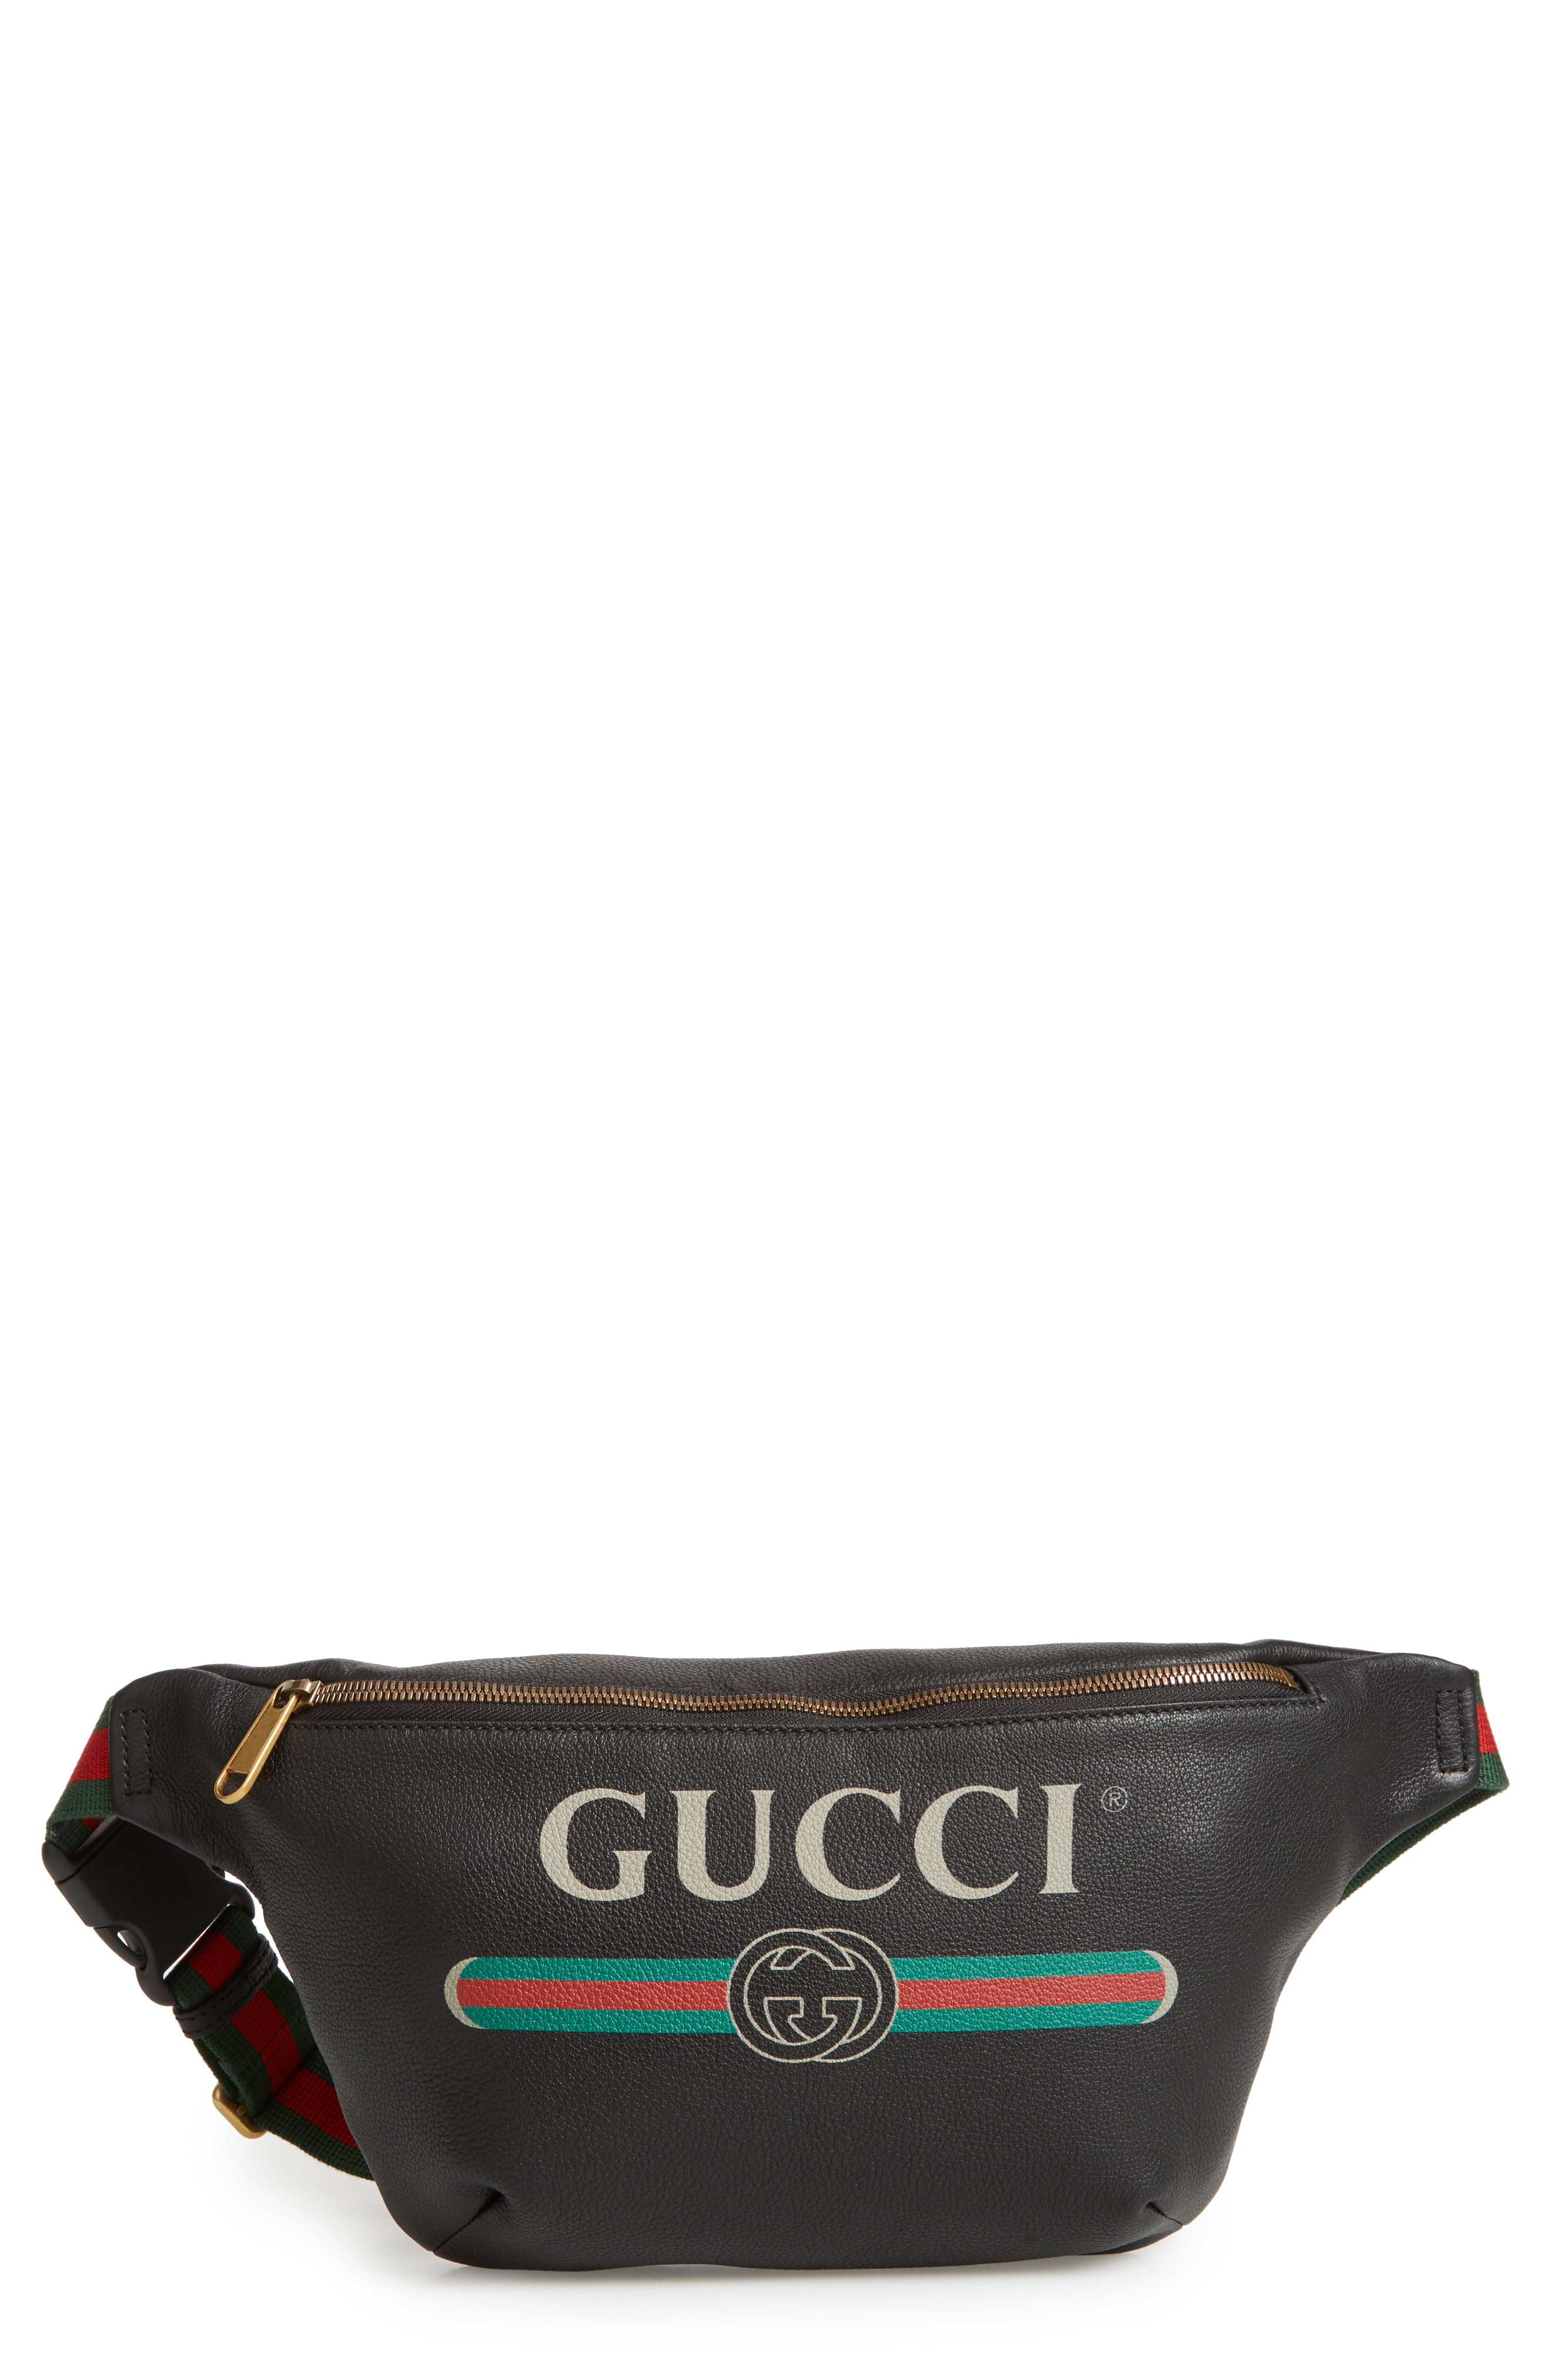 gucci logo fanny pack